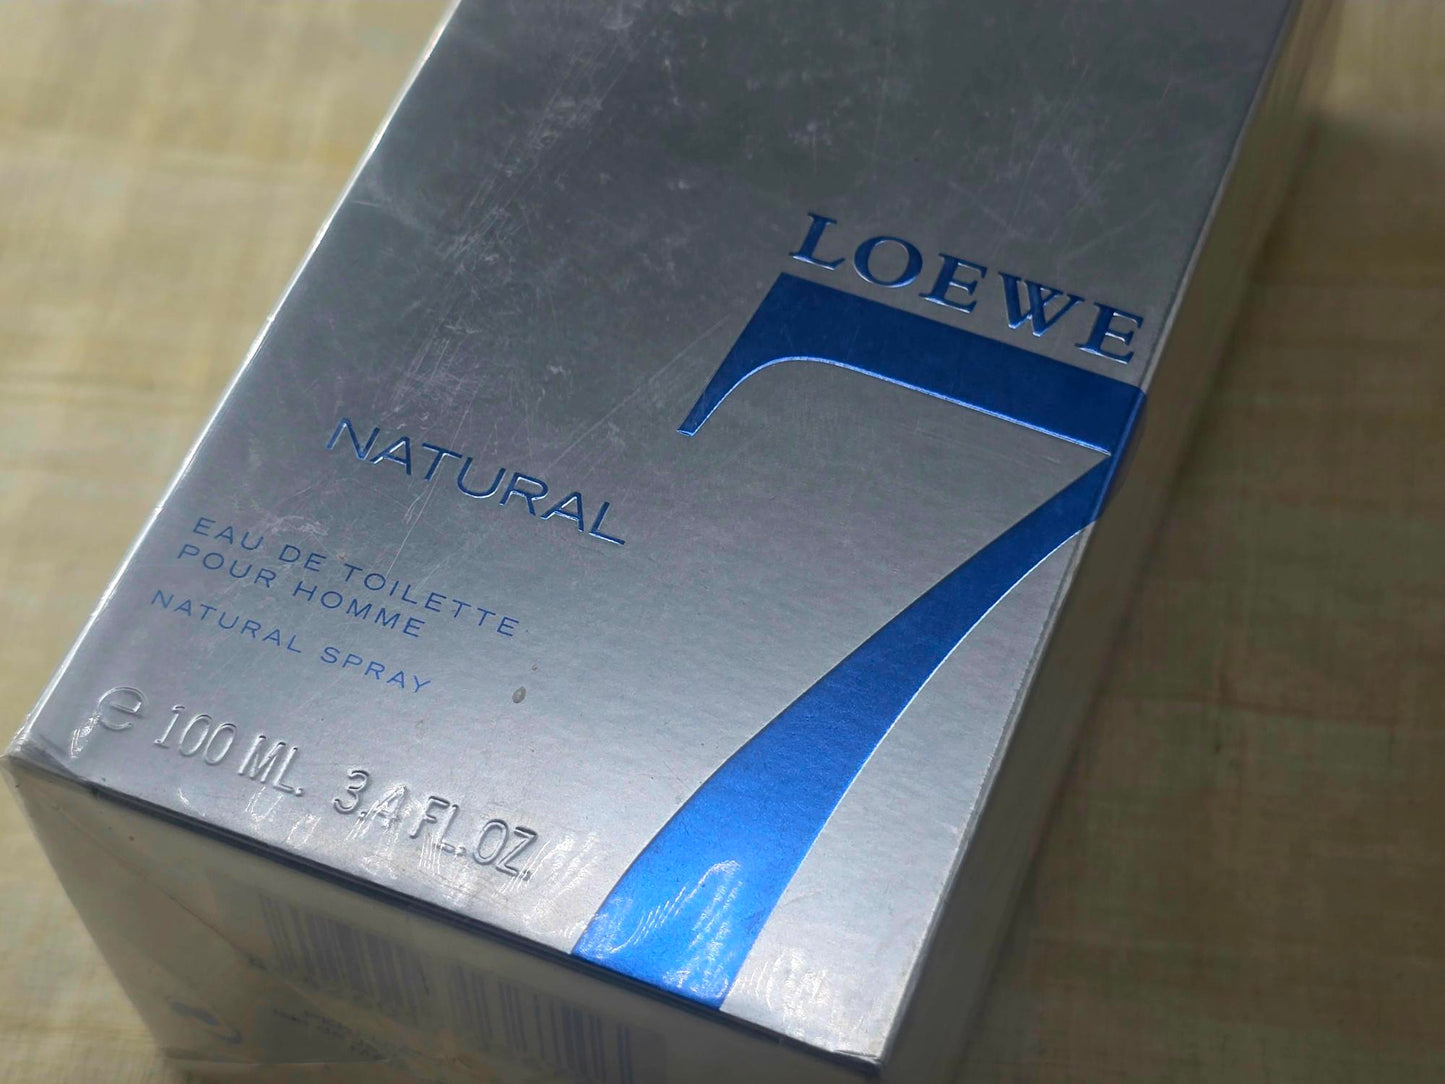 Loewe 7 Natural Loewe for men EDT Spray 100 ml 3.4 oz, Rare, Vintage, Sealed